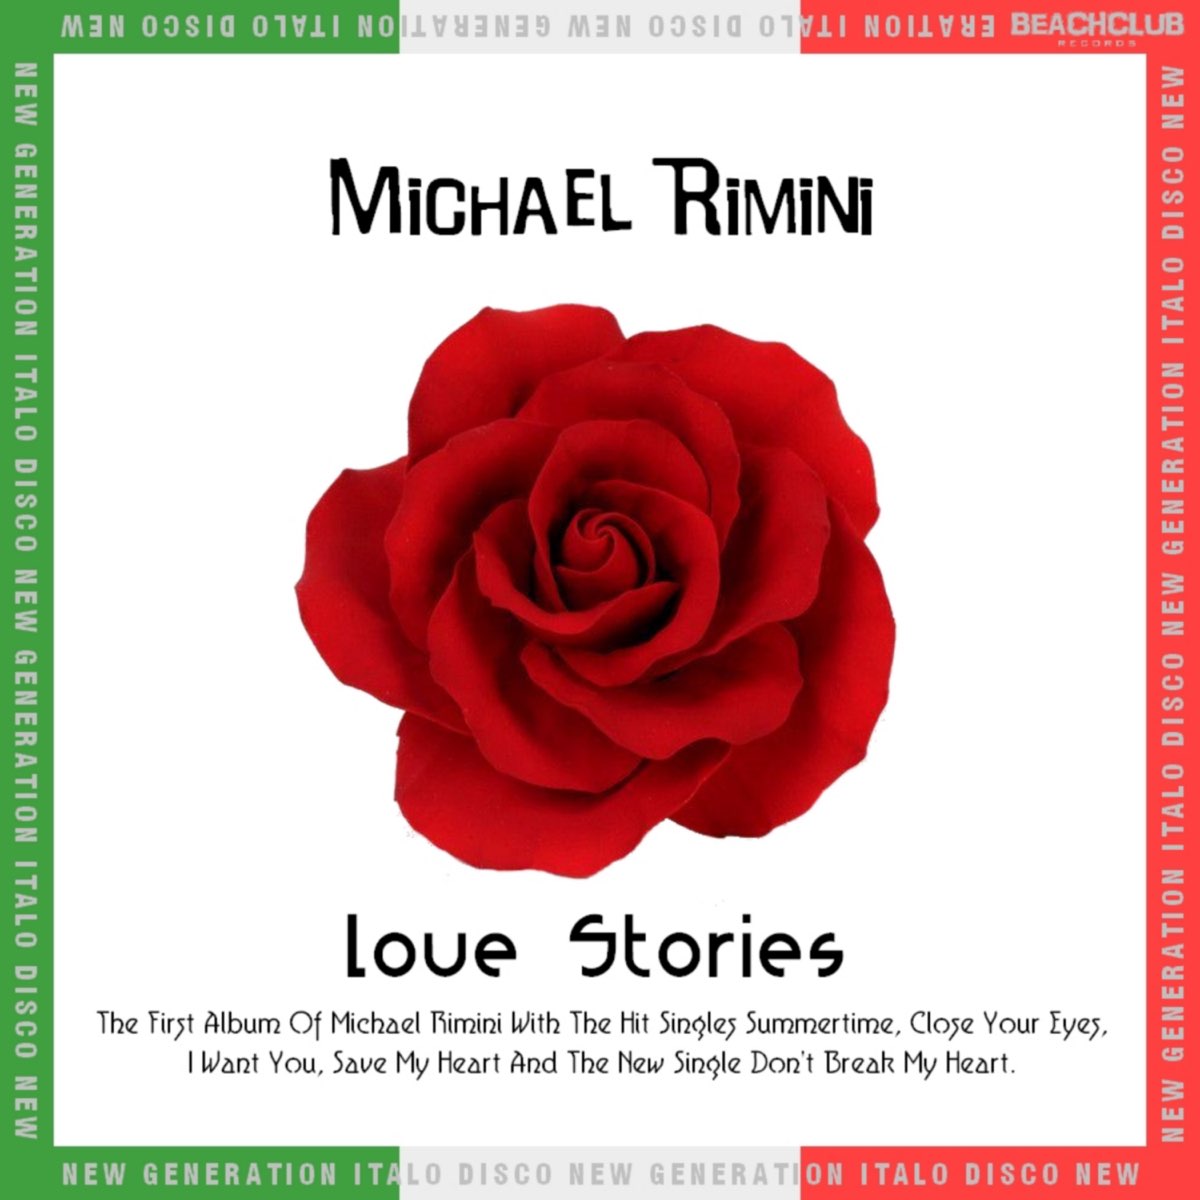 Love Stories By Michael Rimini On Apple Music